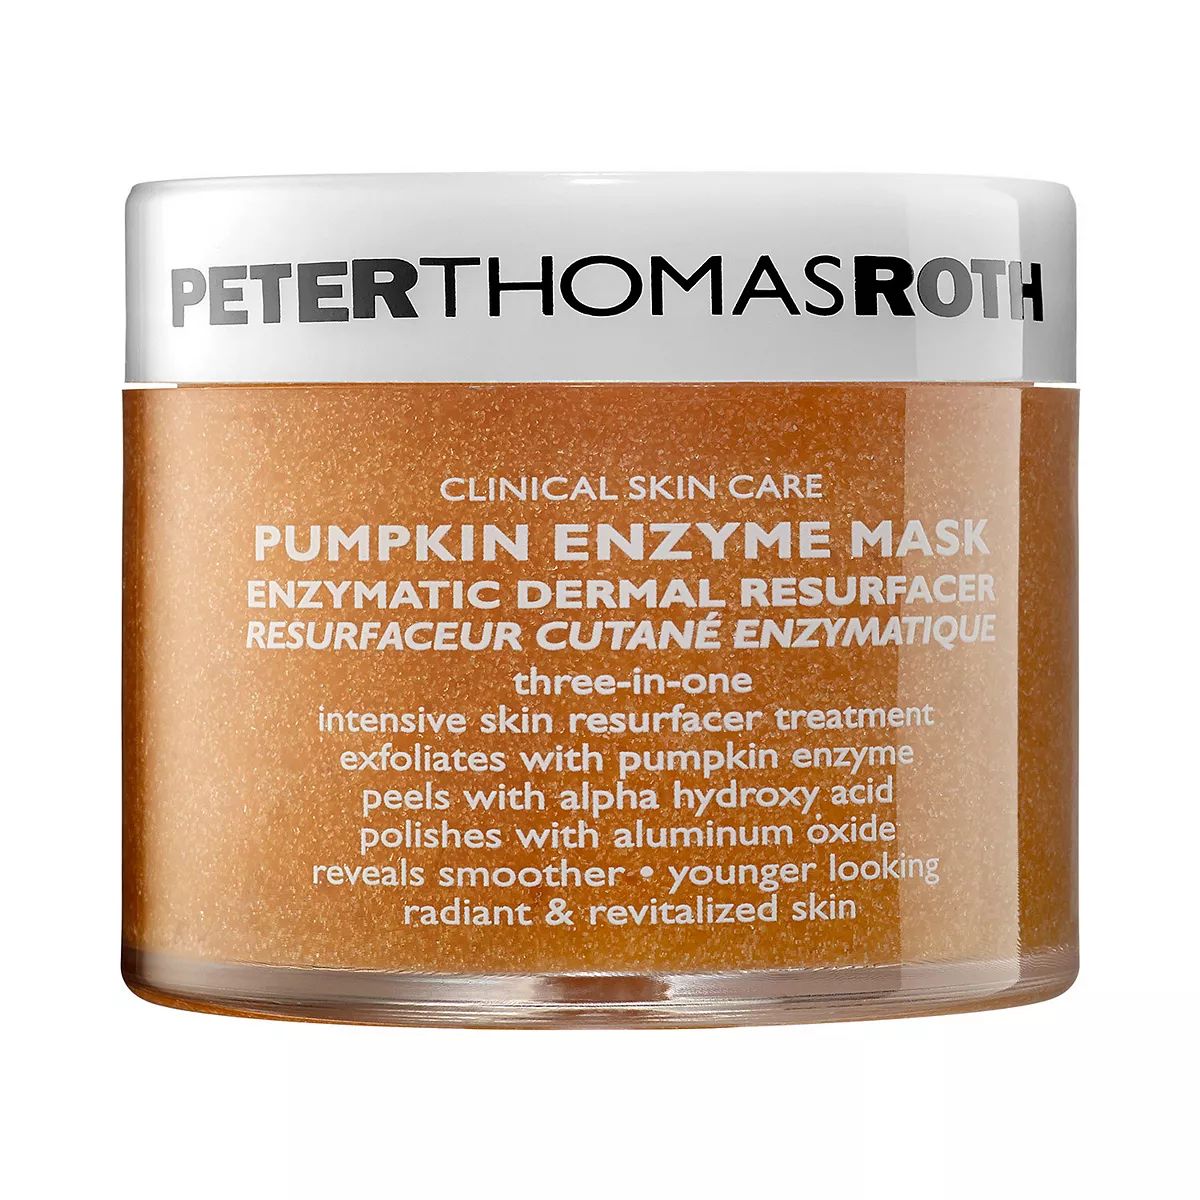 Peter Thomas Roth Pumpkin Enzyme Mask Enzymatic Dermal Resurfacer | Kohl's